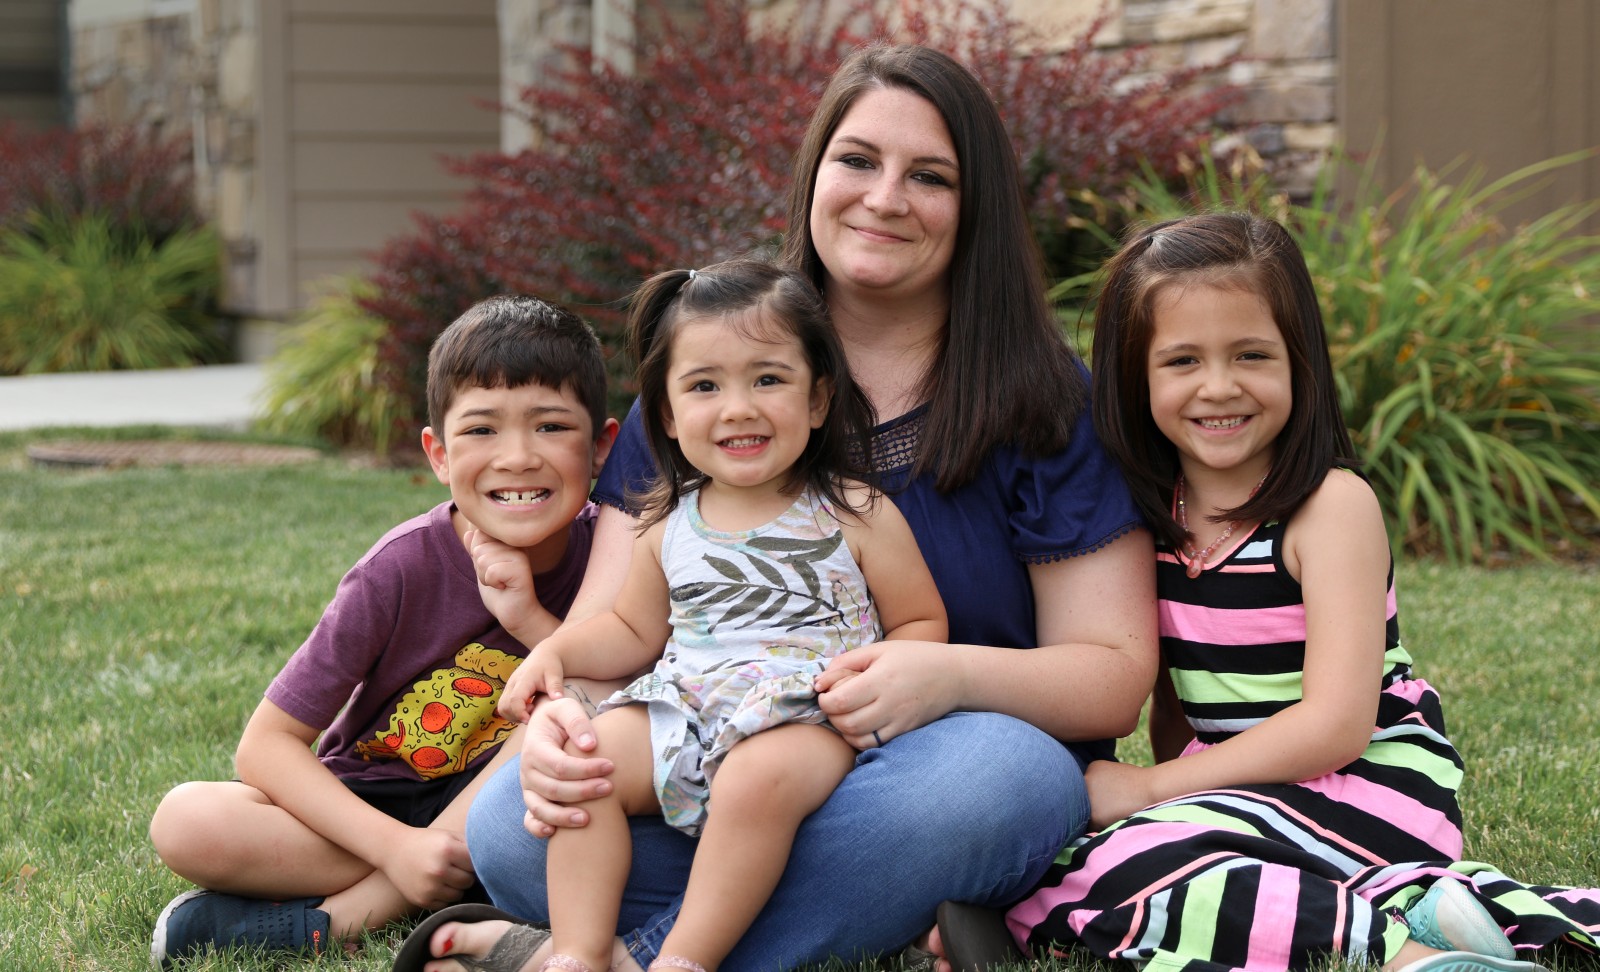 Jessica Faaofo, a 2019-2020 scholarship recipient, and her three children